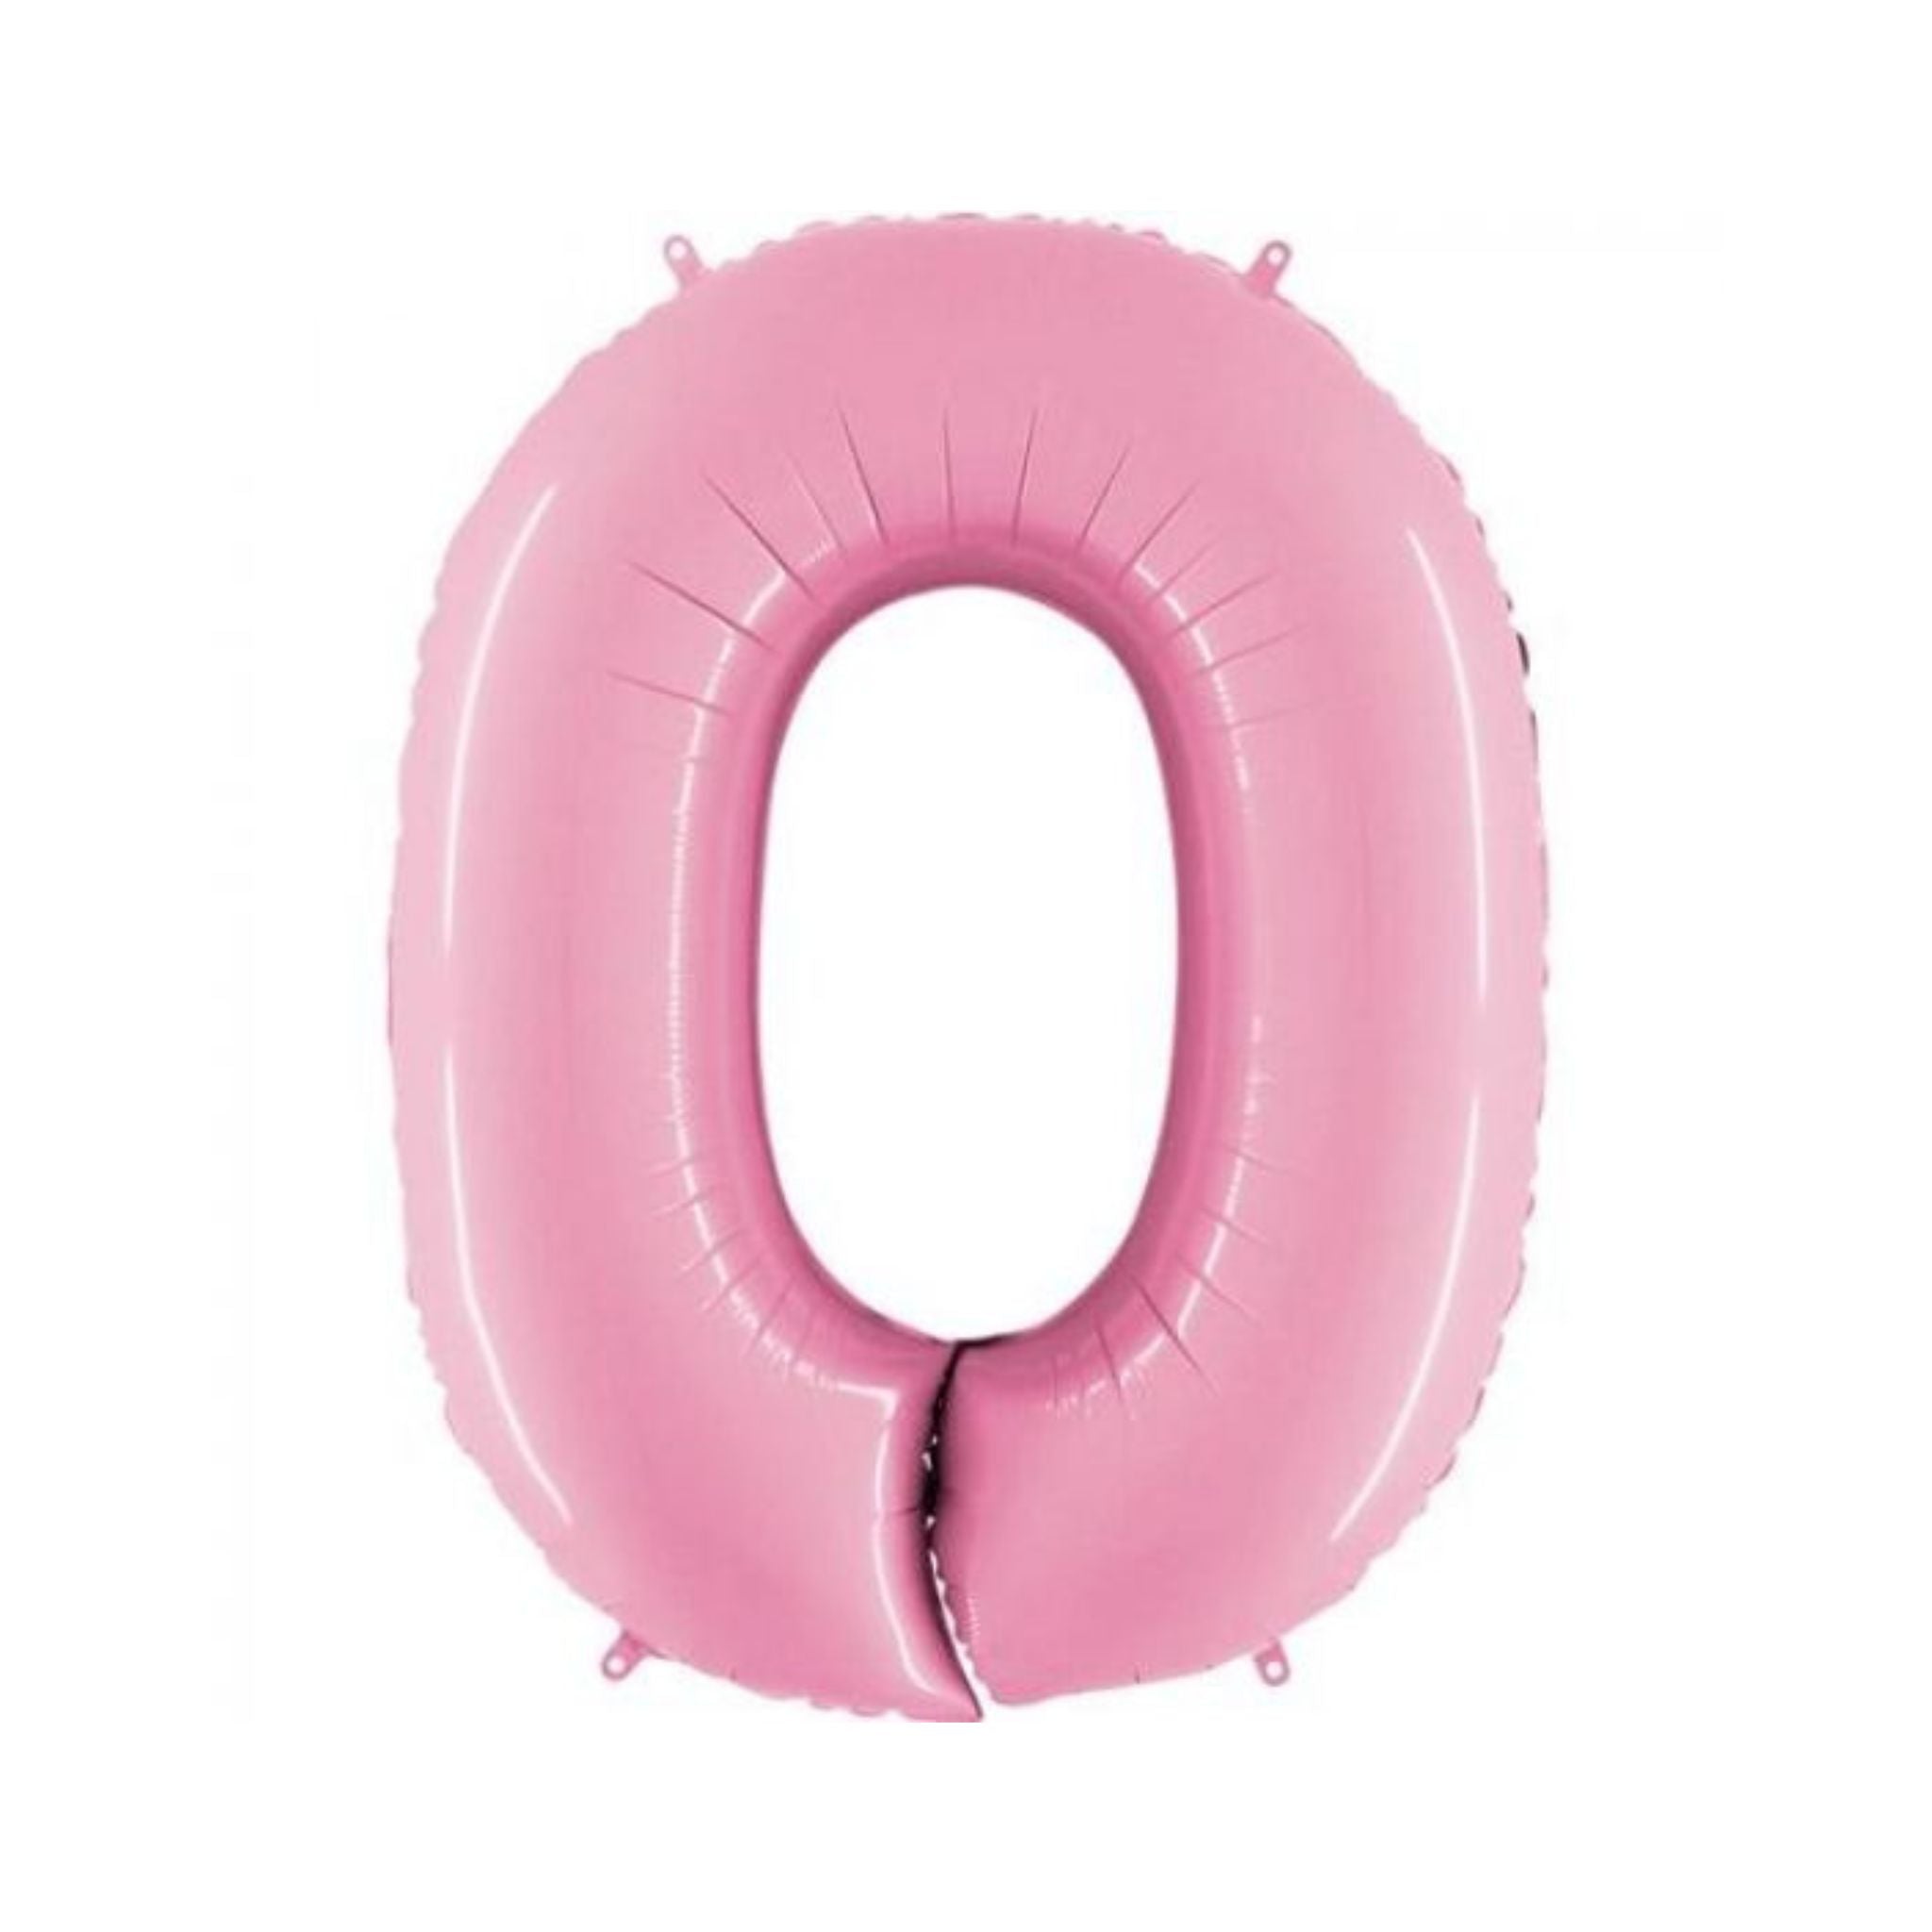 Pastel Pink Foil Number Balloon